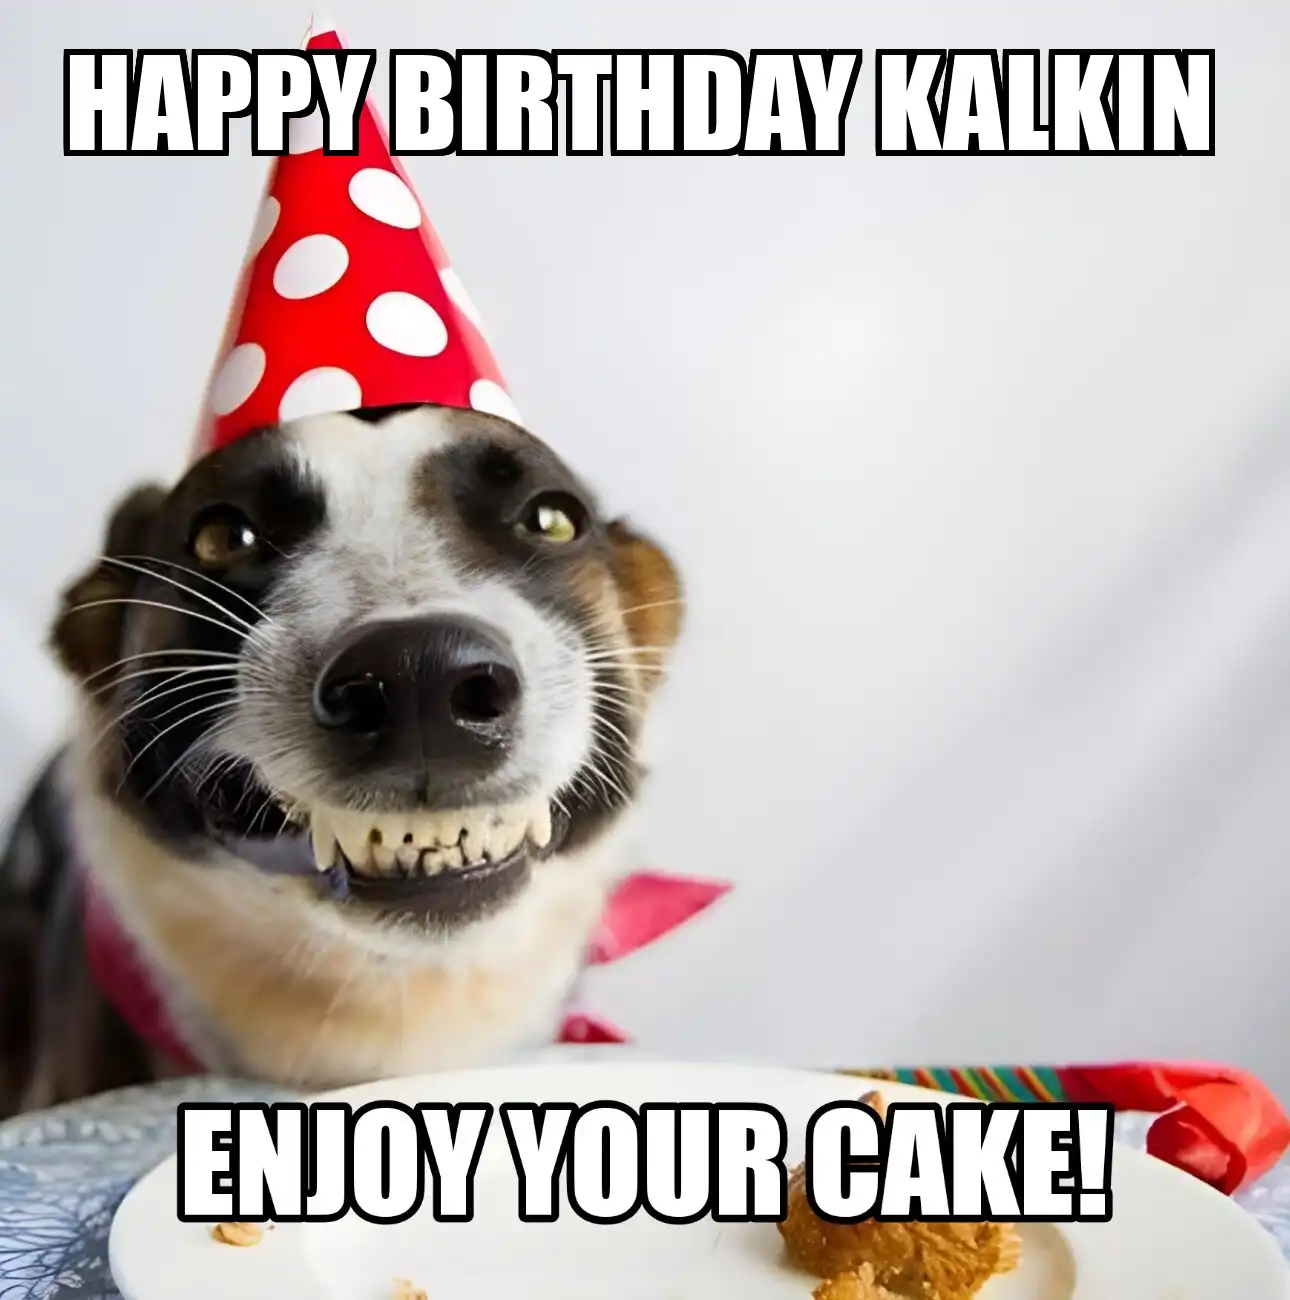 Happy Birthday Kalkin Enjoy Your Cake Dog Meme